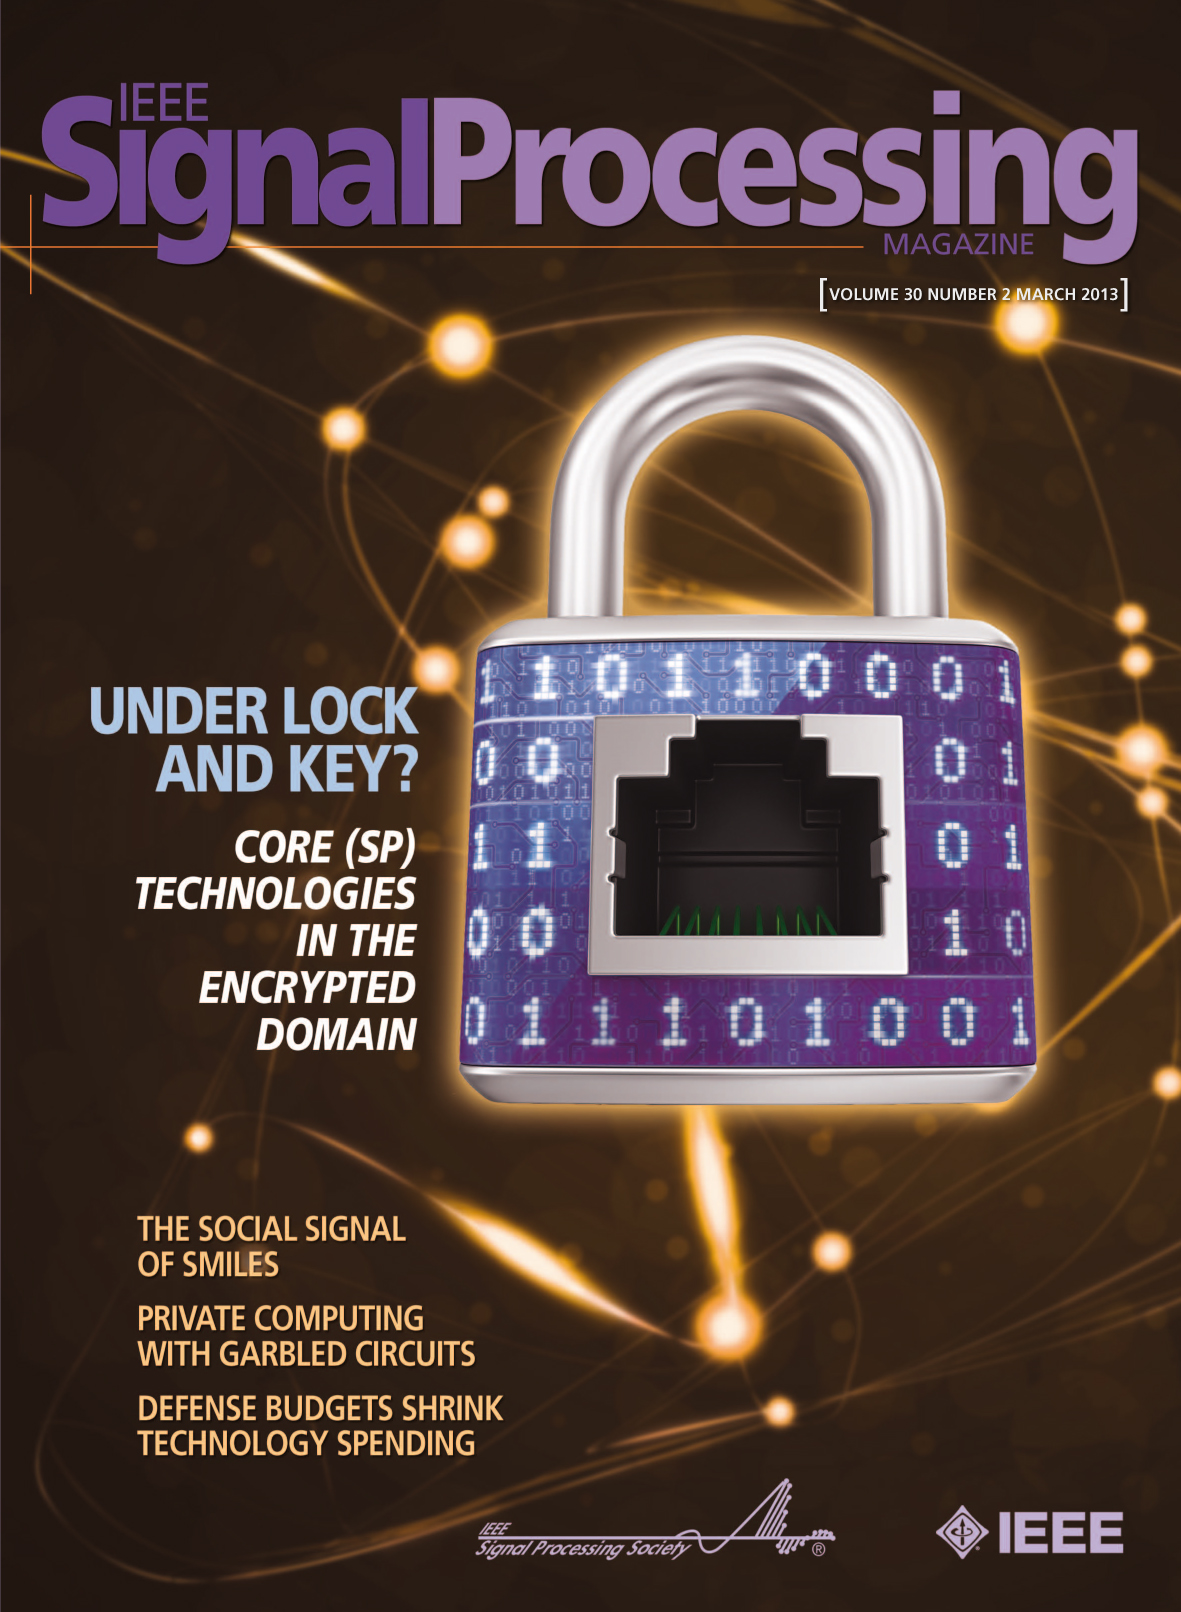 IEEE Signal Processing Magazine